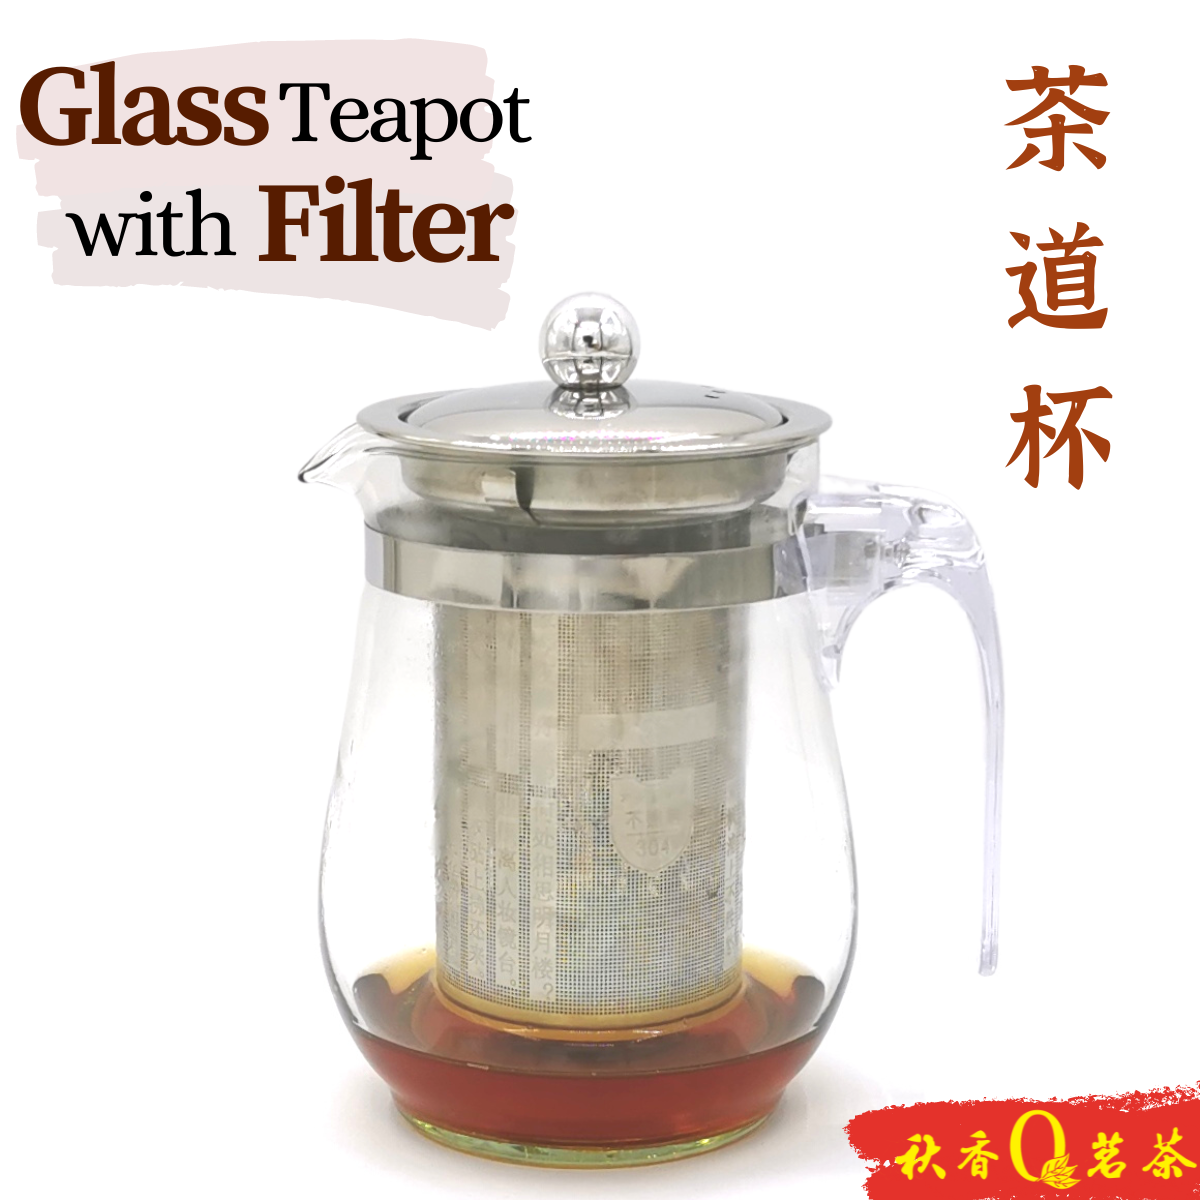 茶道杯 Glass Tea Pot with filter (304 不锈钢滤网｜304 Stainless Steel Filter)【500ml】